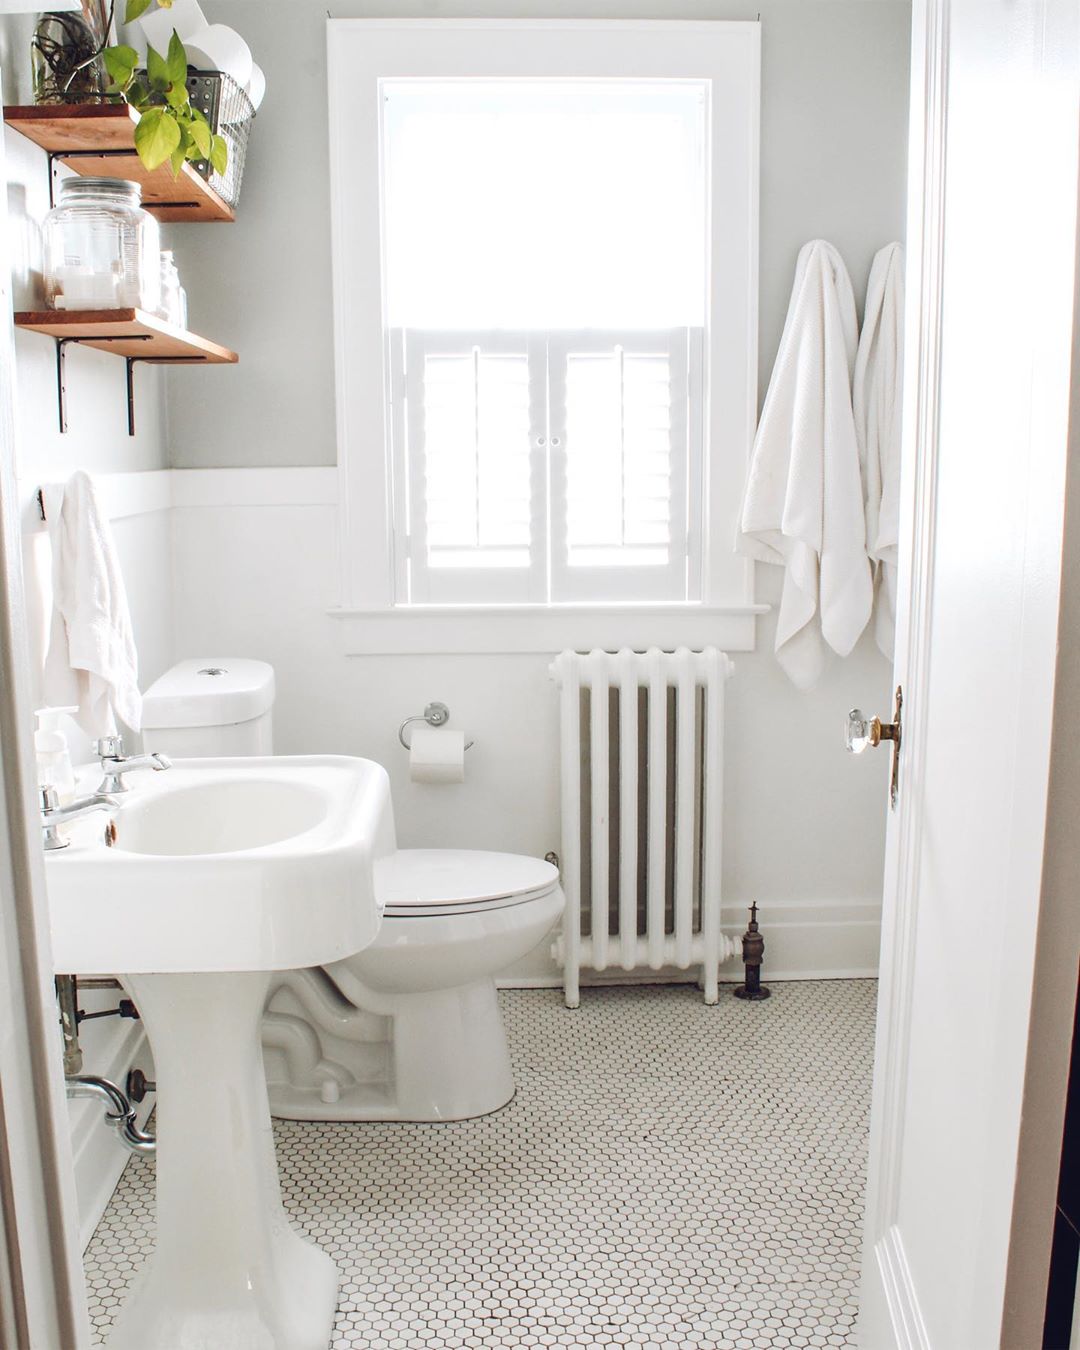 Minimal Home Decor, Bathroom Organization and Storage, Shower